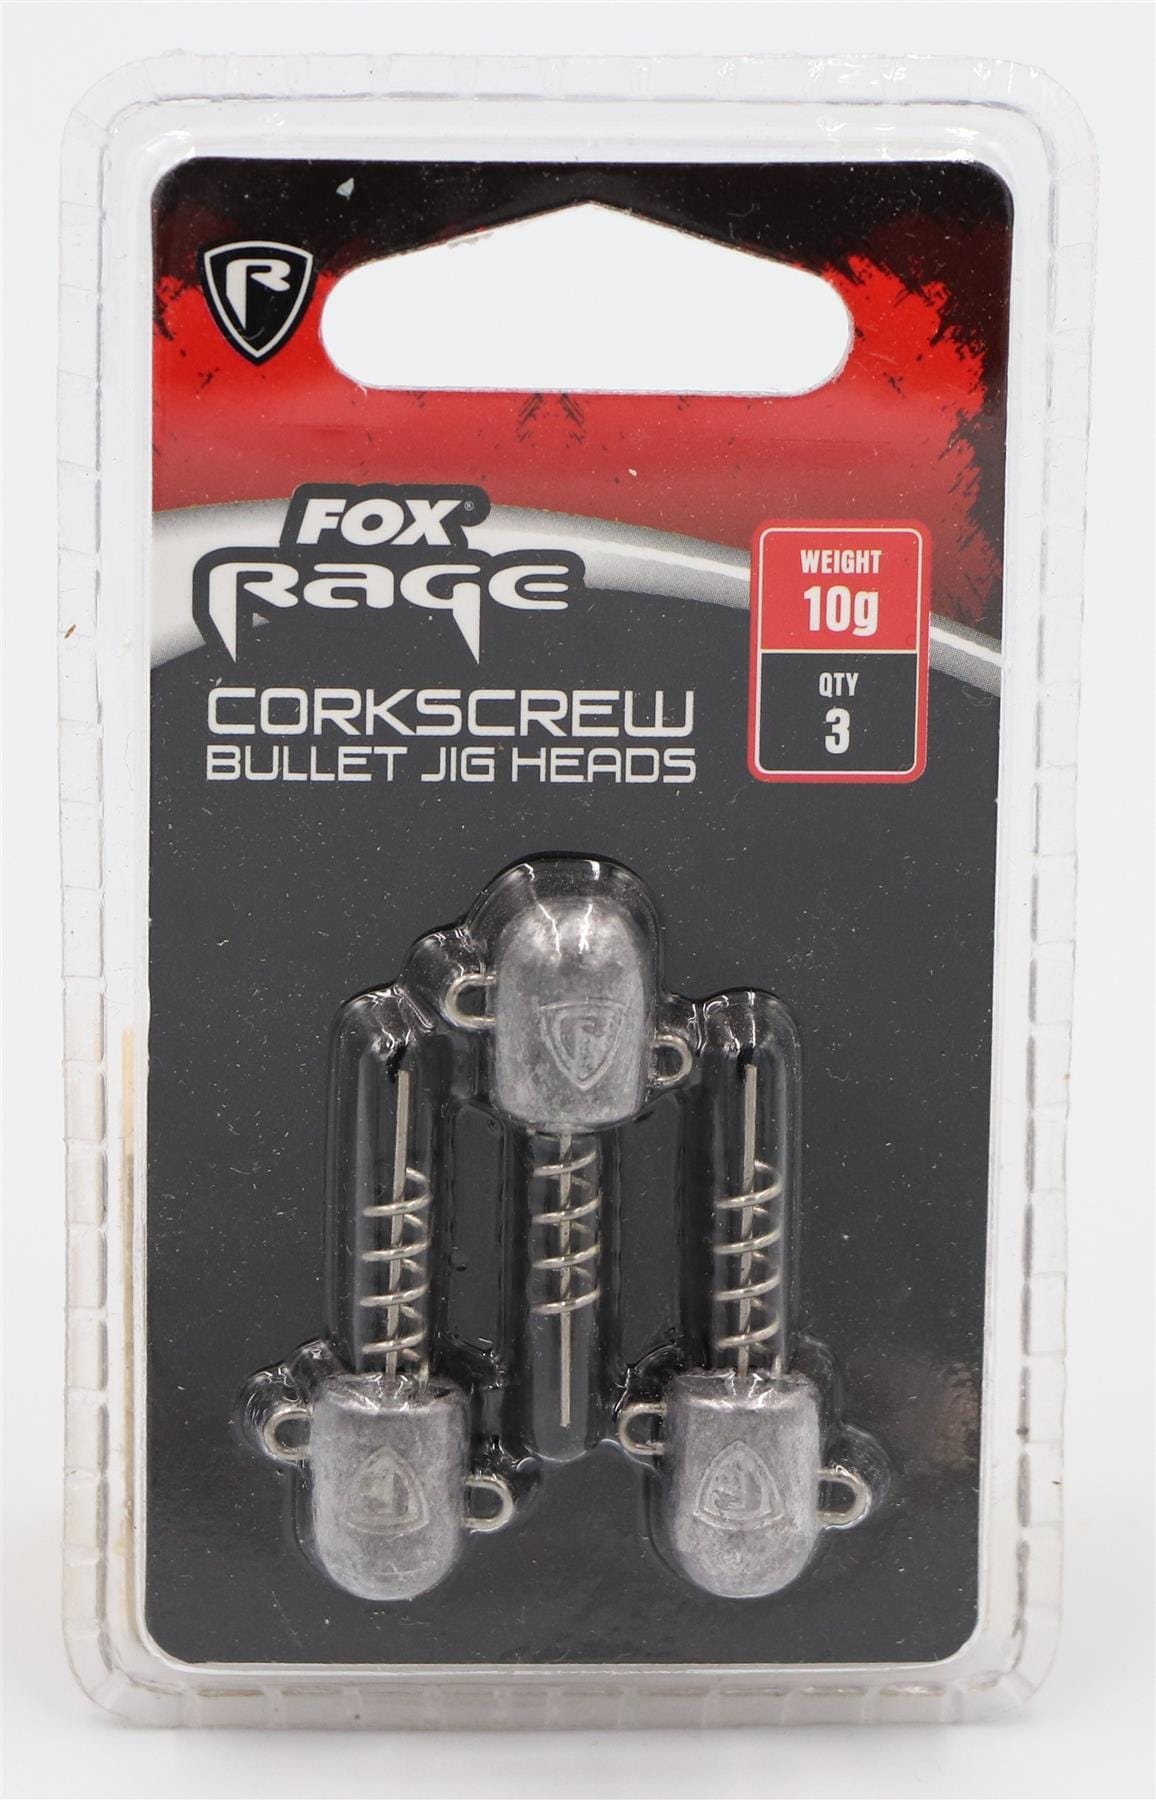 FOX Rage Corkscrew Jig Heads - 10g x3 Bullet.